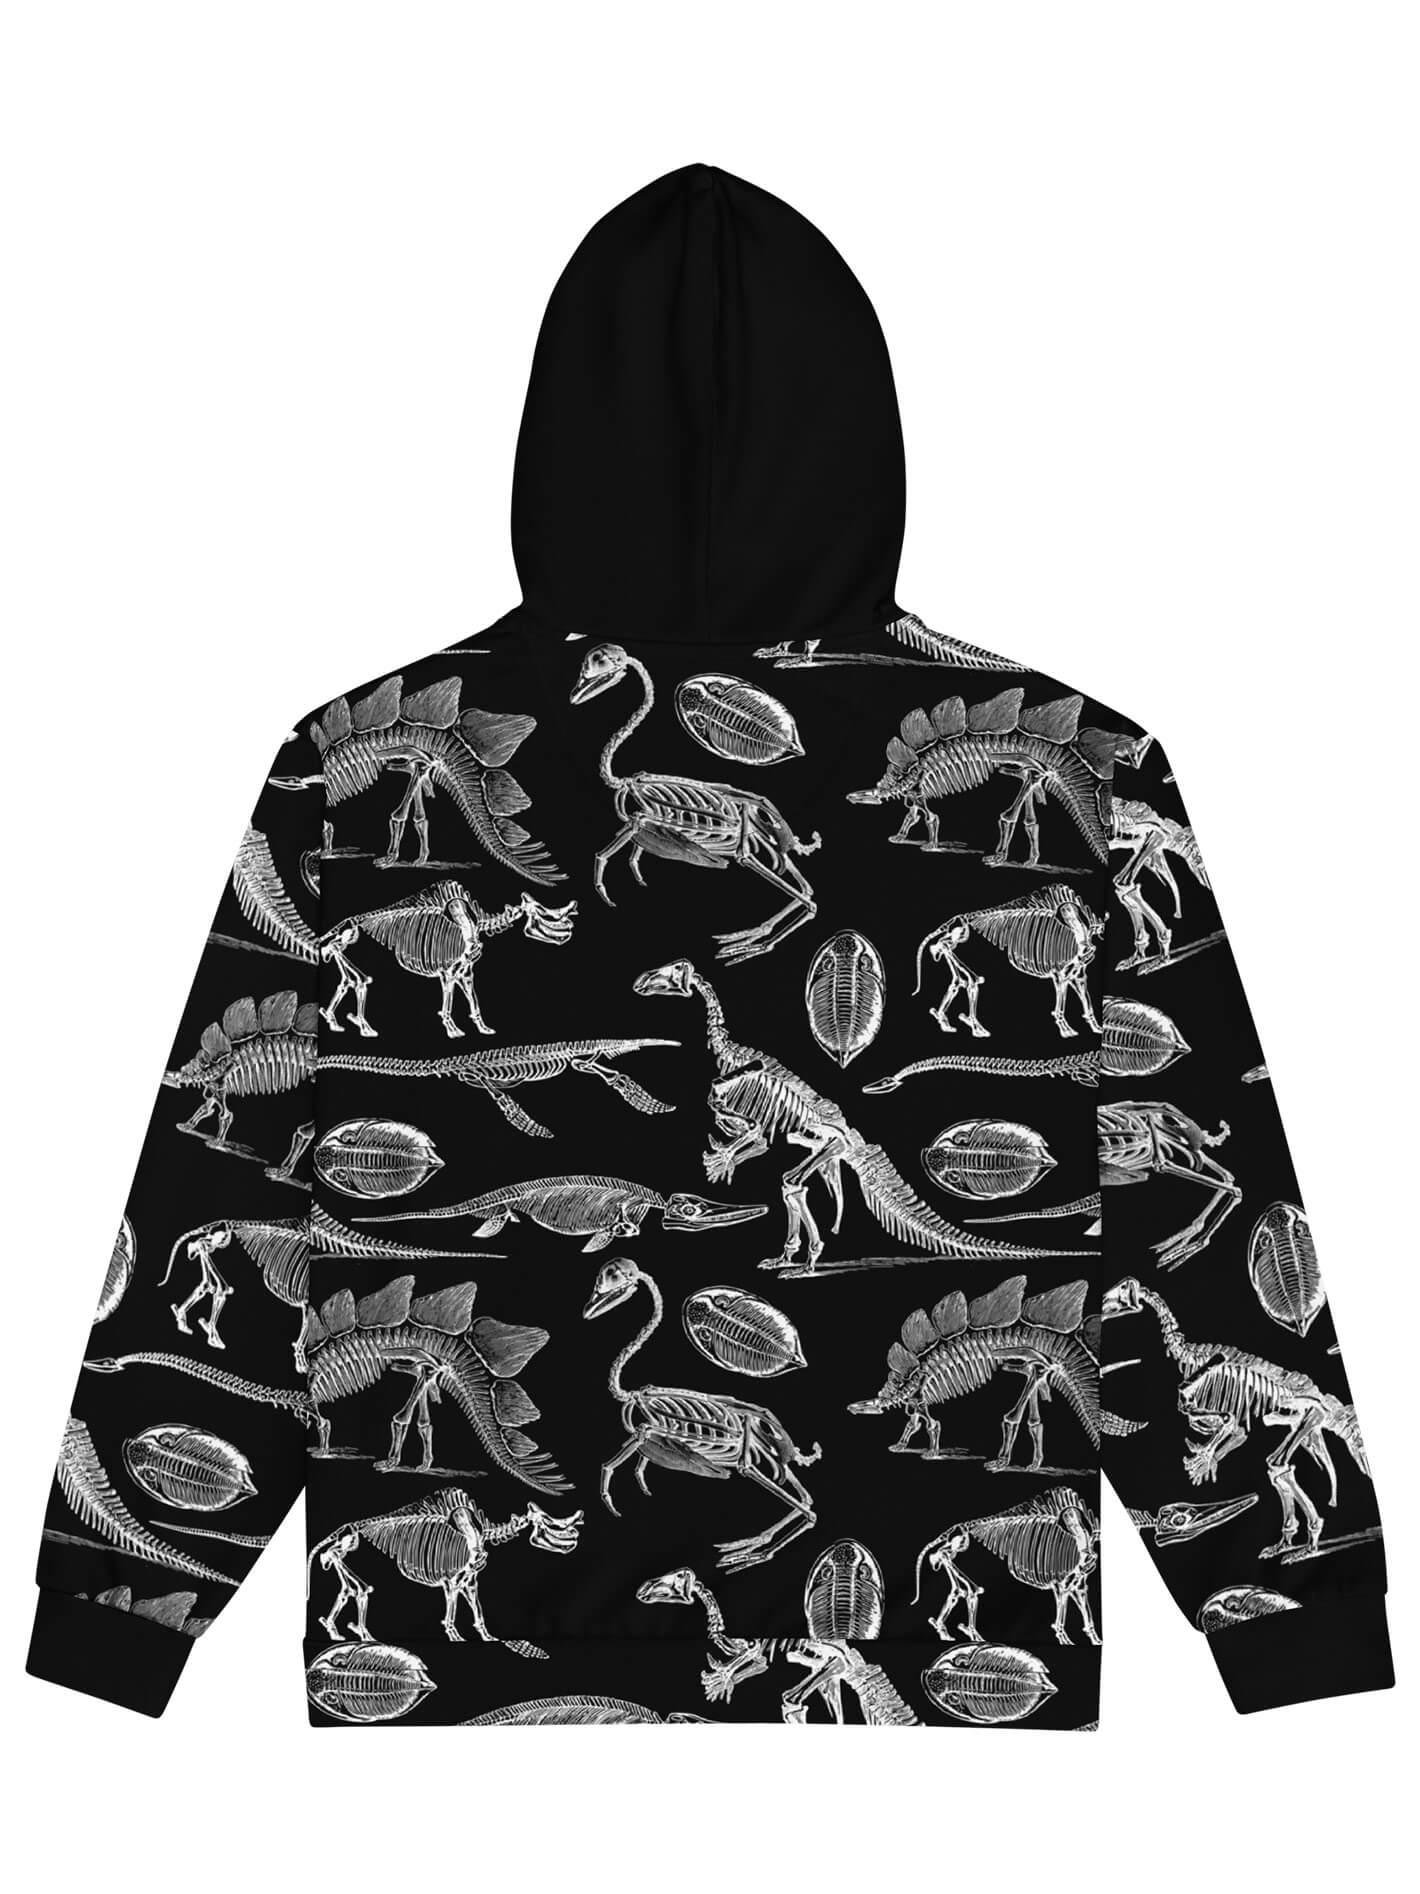 Dinosaur fossil plus size black hoodie.